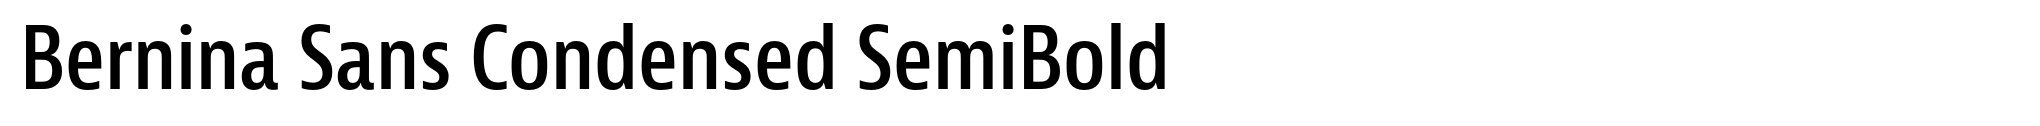 Bernina Sans Condensed SemiBold image